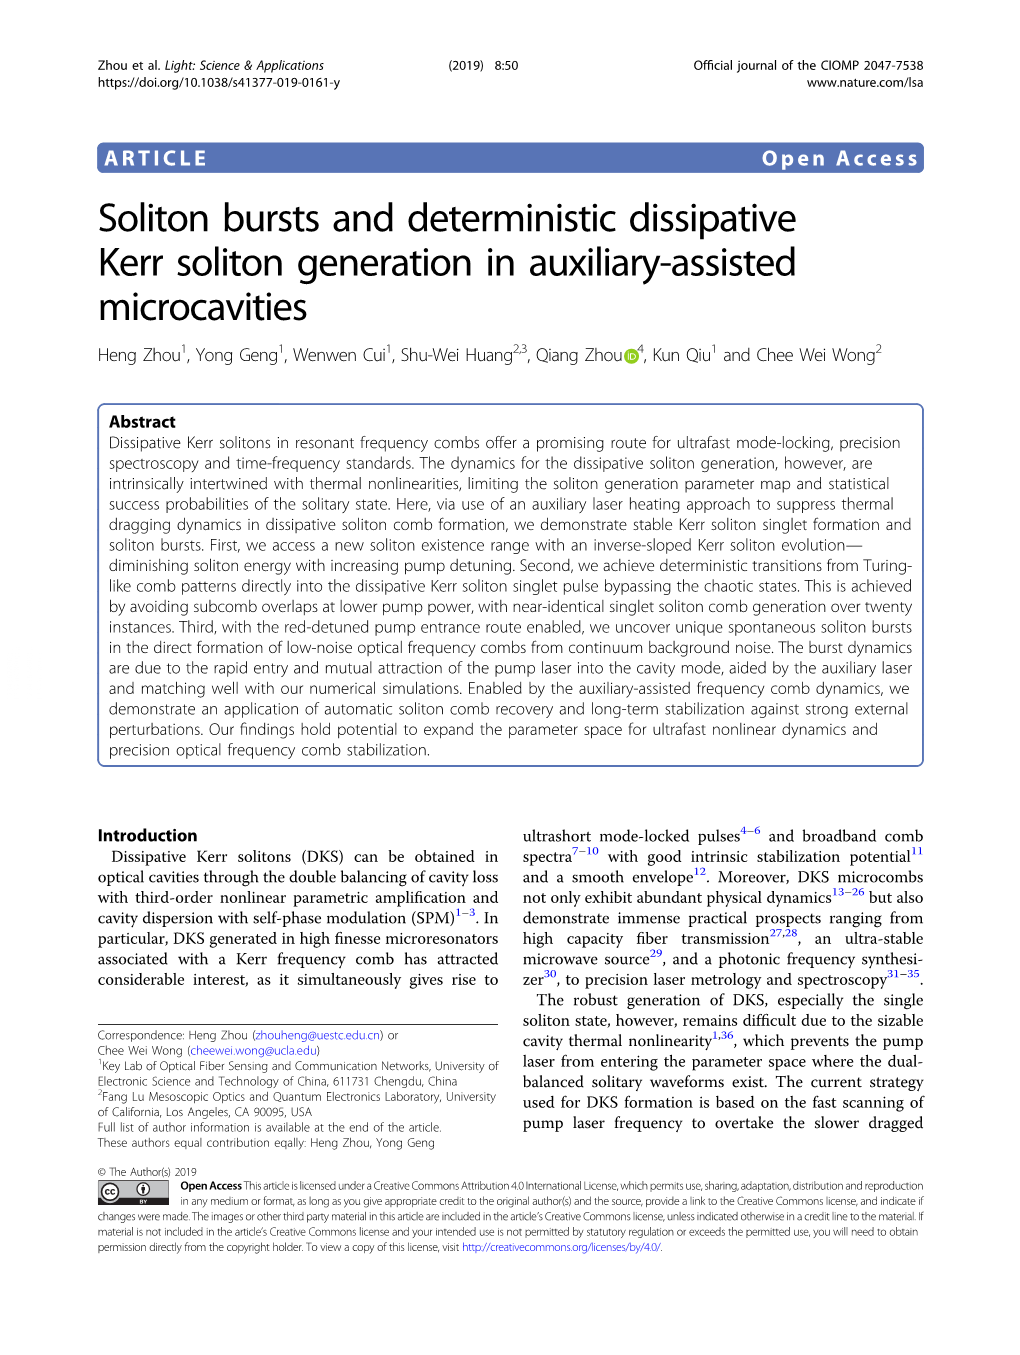 Soliton Bursts and Deterministic Dissipative Kerr Soliton Generation